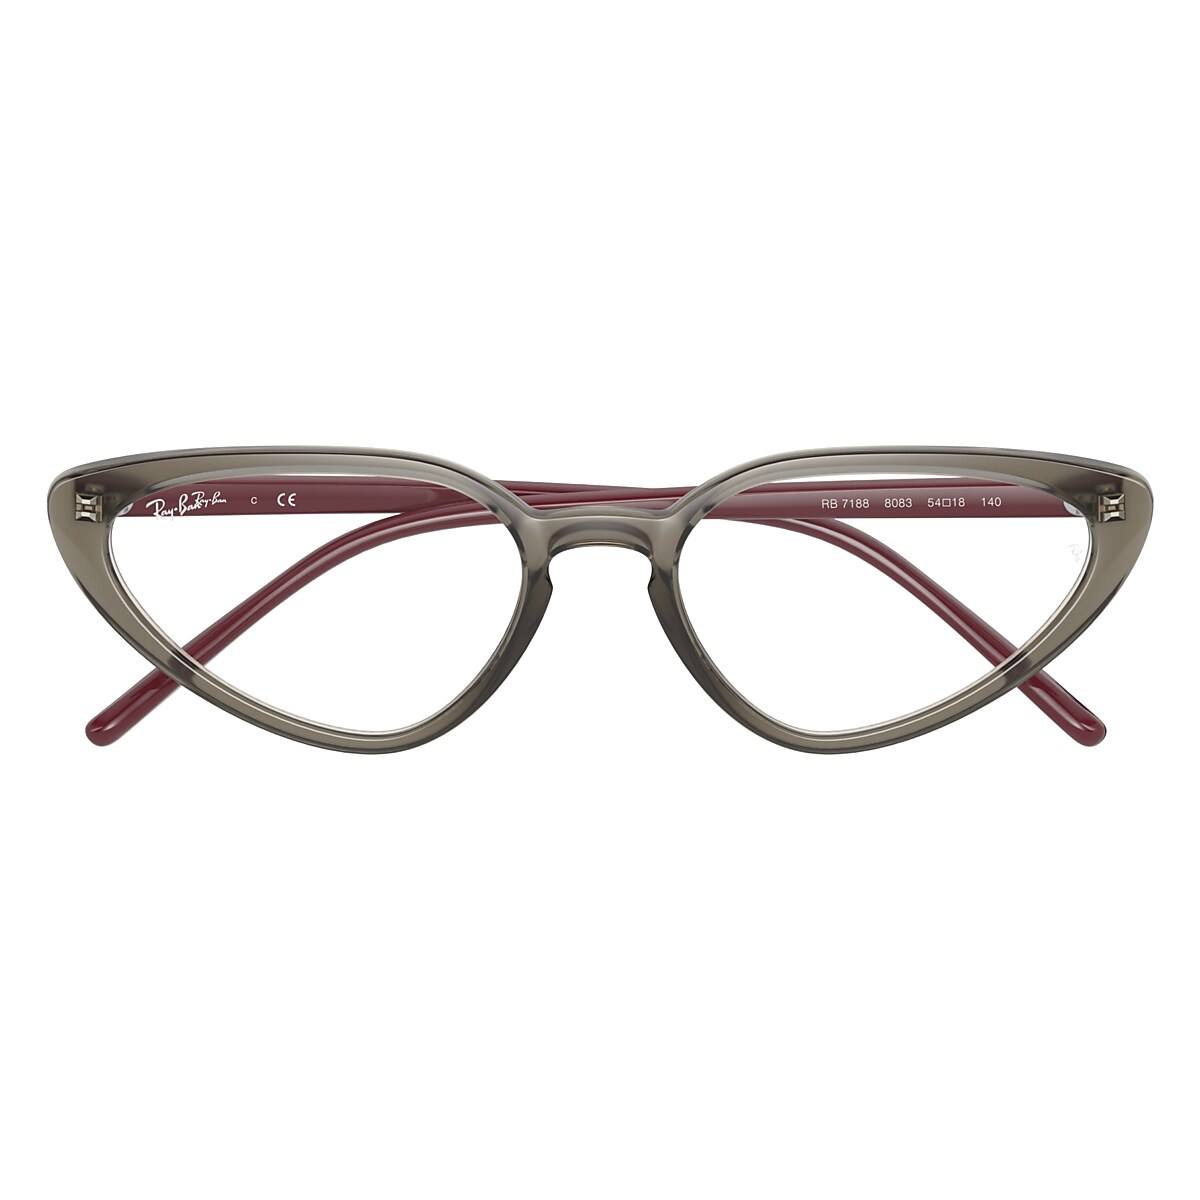 RB7188 OPTICS Eyeglasses with Transparent Grey Frame - RB7188